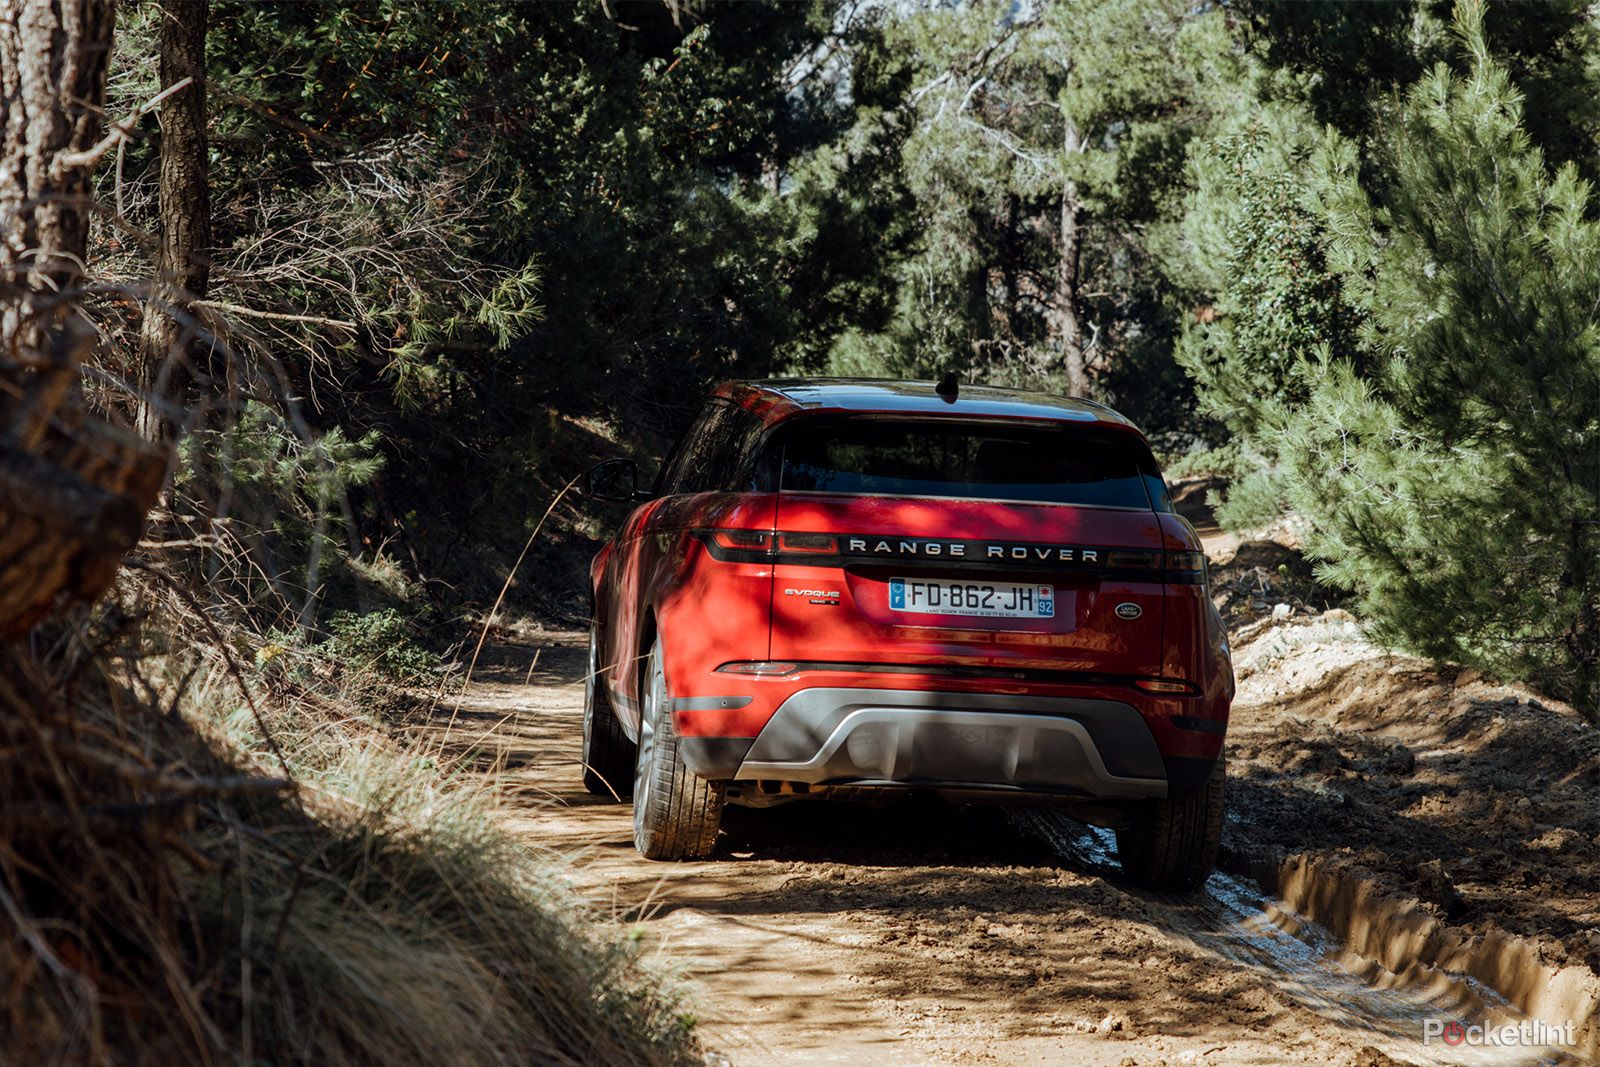 Range Rover Evoque Review 2019 image 4